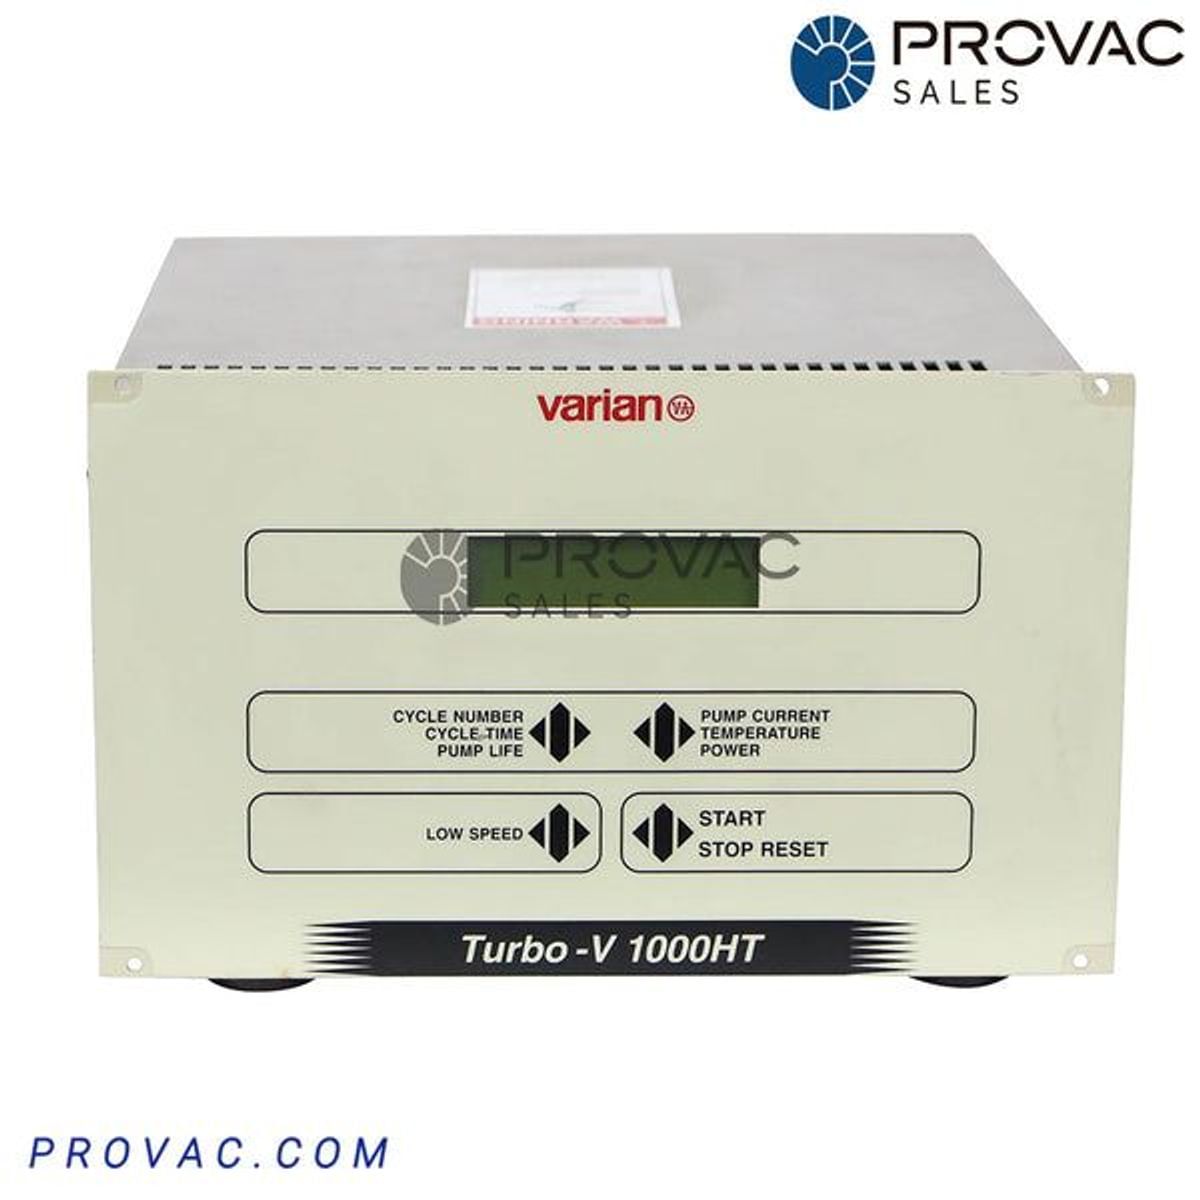 Varian TV-1000HT Turbo Pump Controller, Rebuilt Image 1